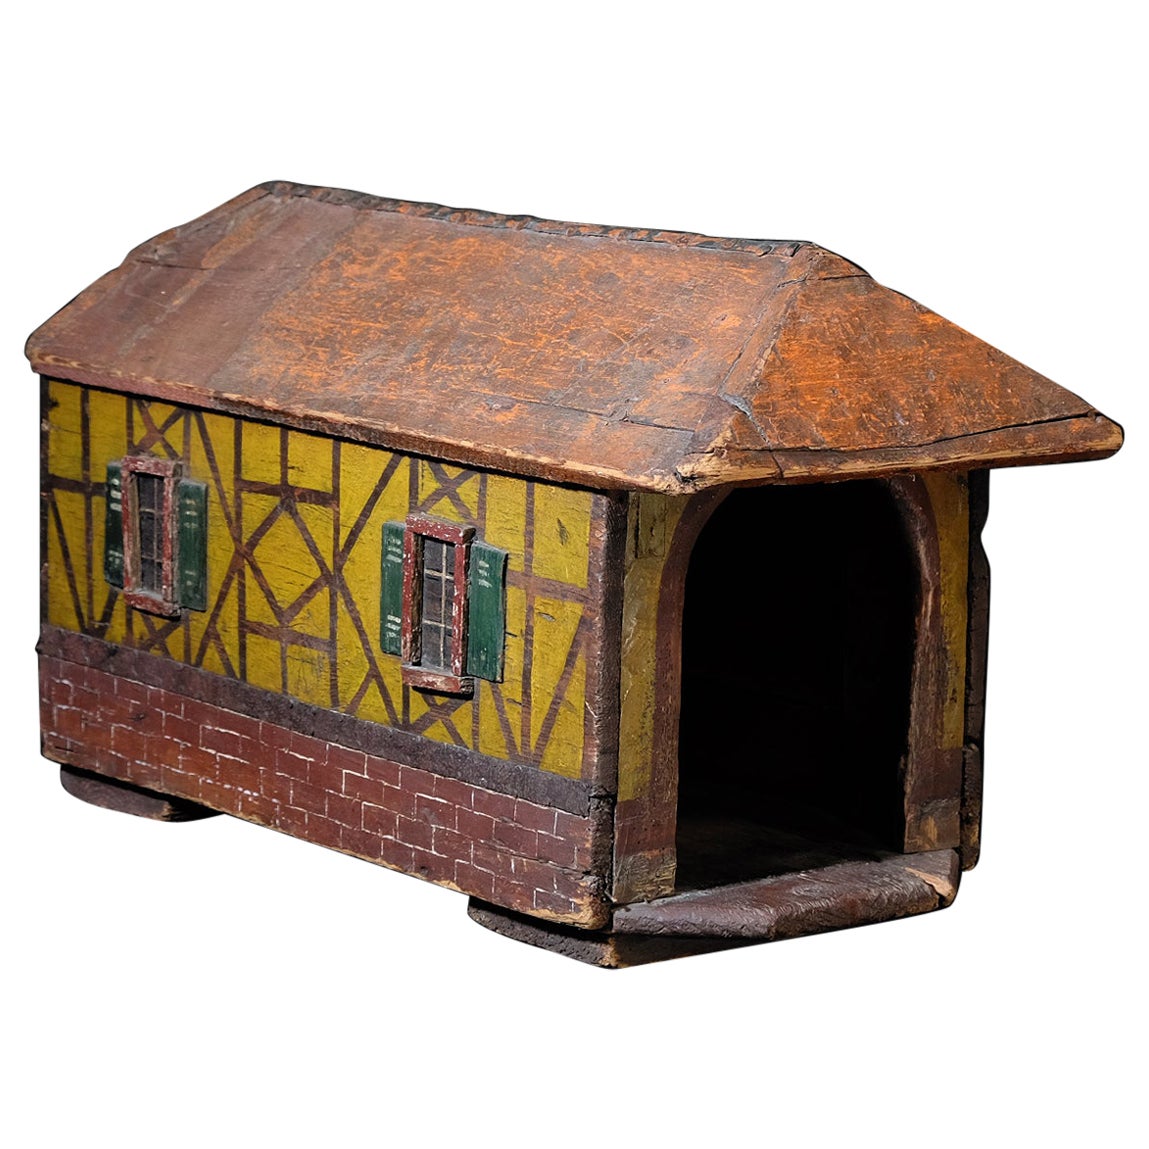 19th Century French Folk Art Dog Kennel, Hand Painted Cob Barn, Pine, Polychrome